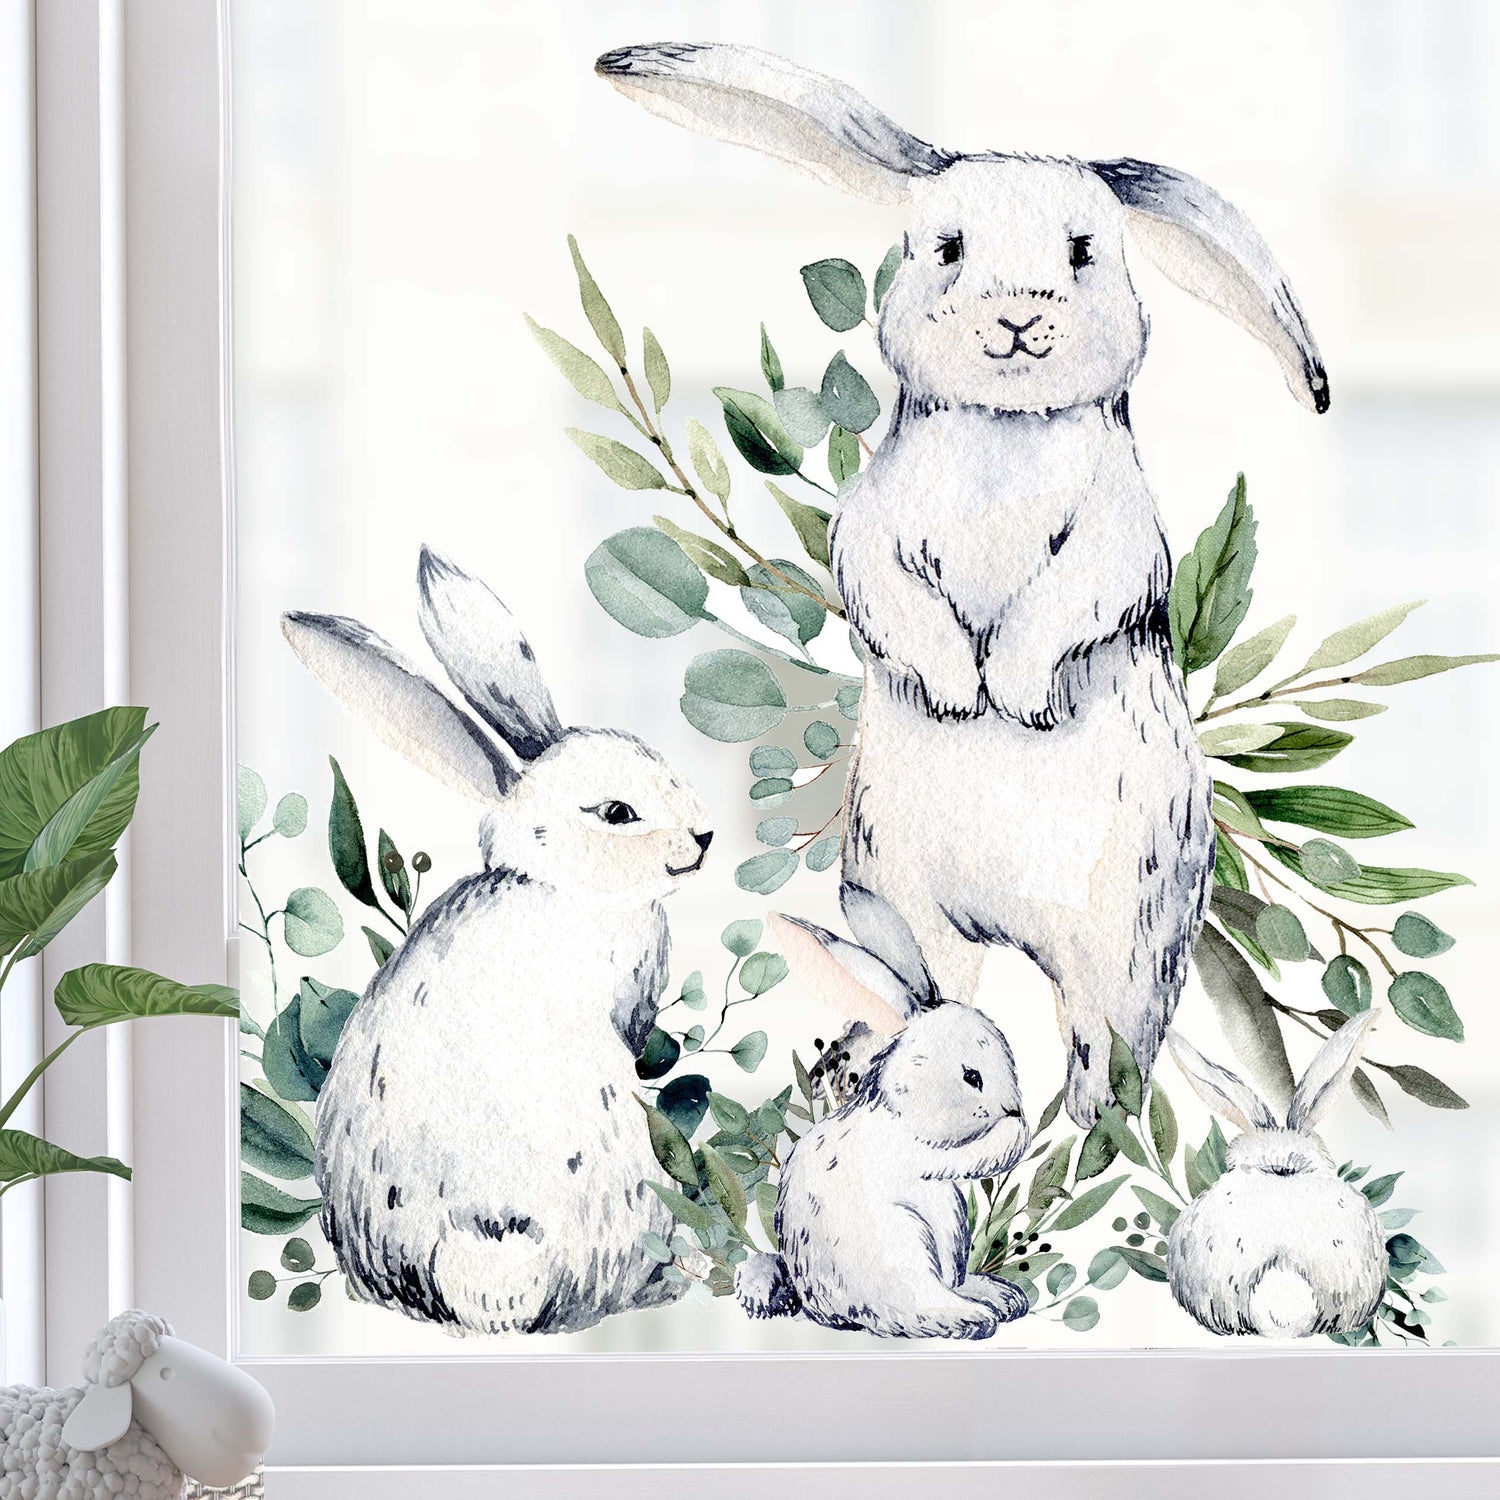 Spring / Easter Window Decals Dizzy Duck Designs